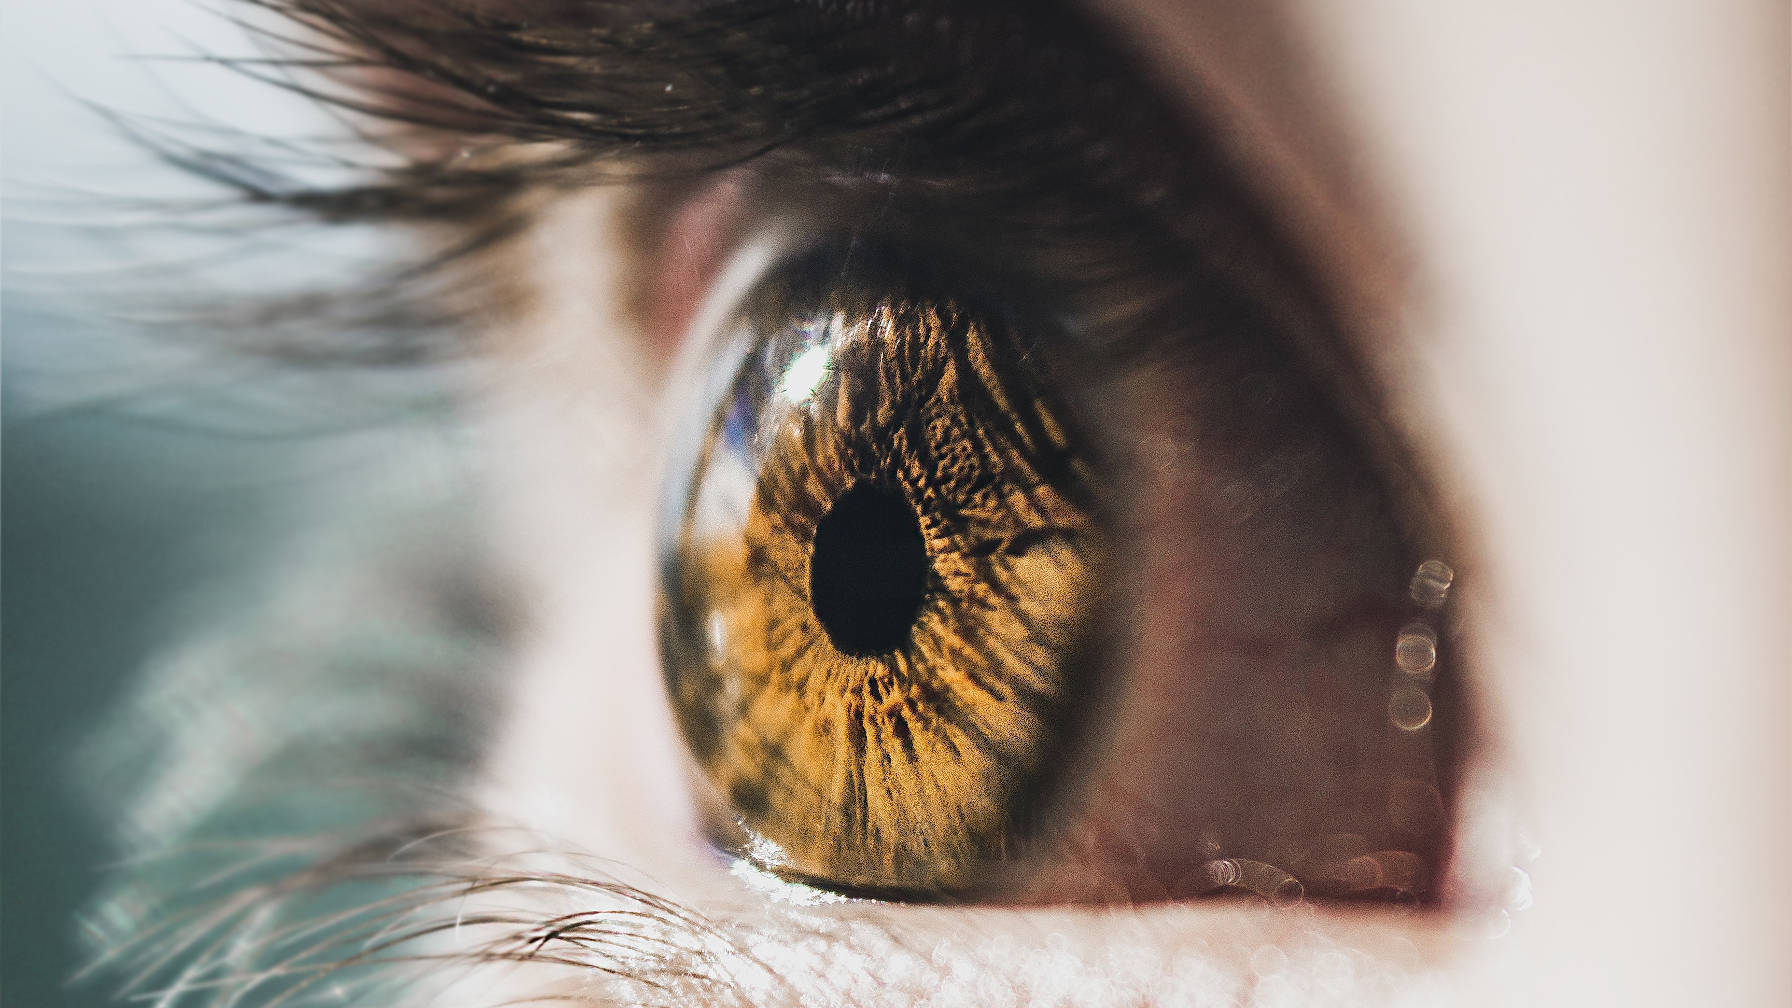 Decorative image of a closeup-view of a human eye.